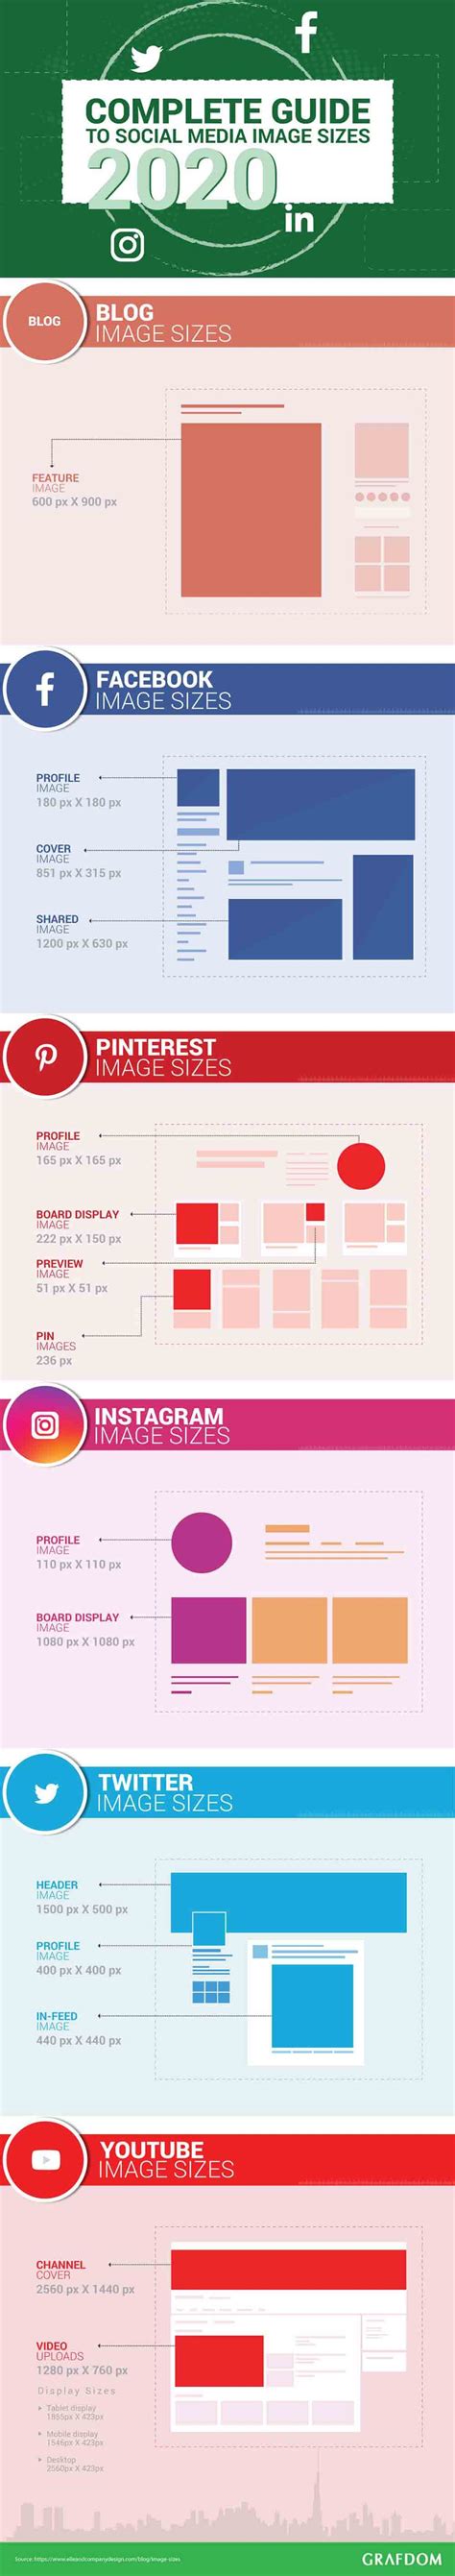 social media image sizes   networks cheatsheet gambaran